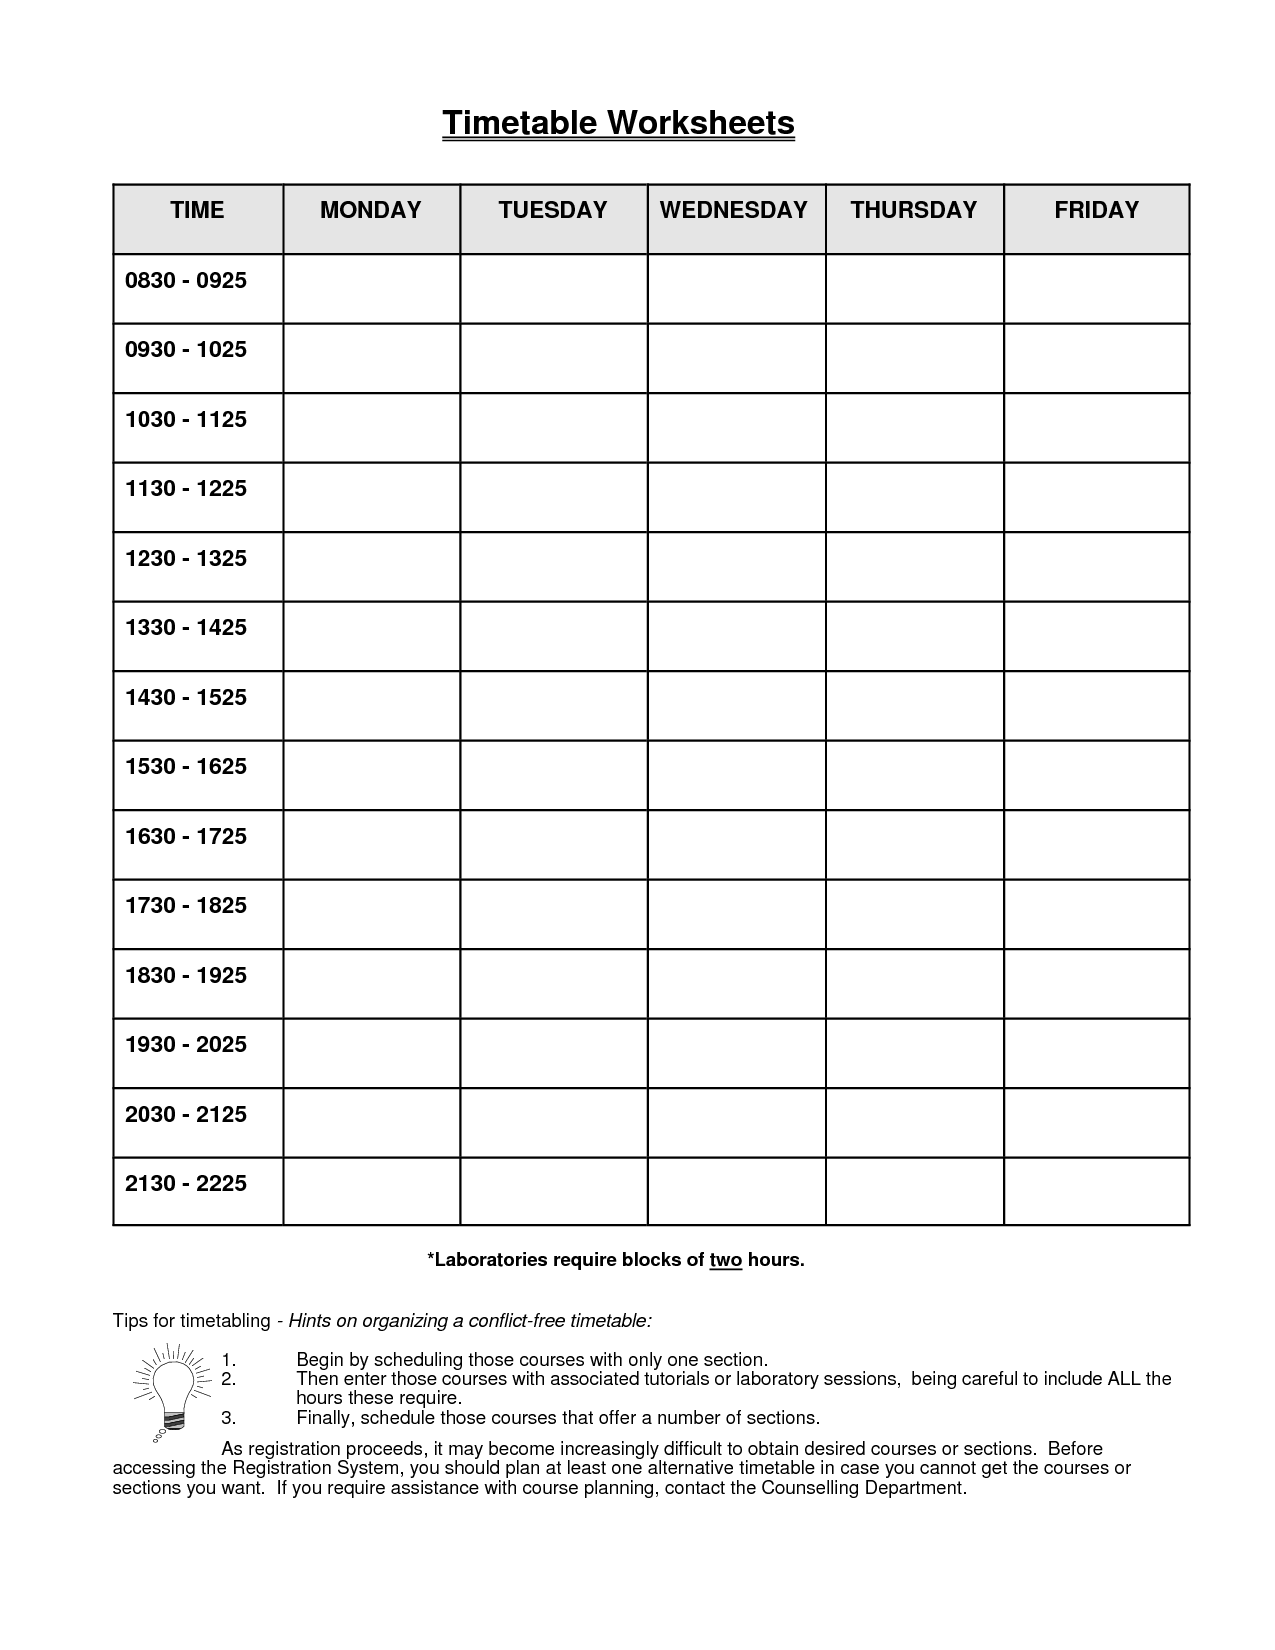 multiplication-table-worksheets-printable